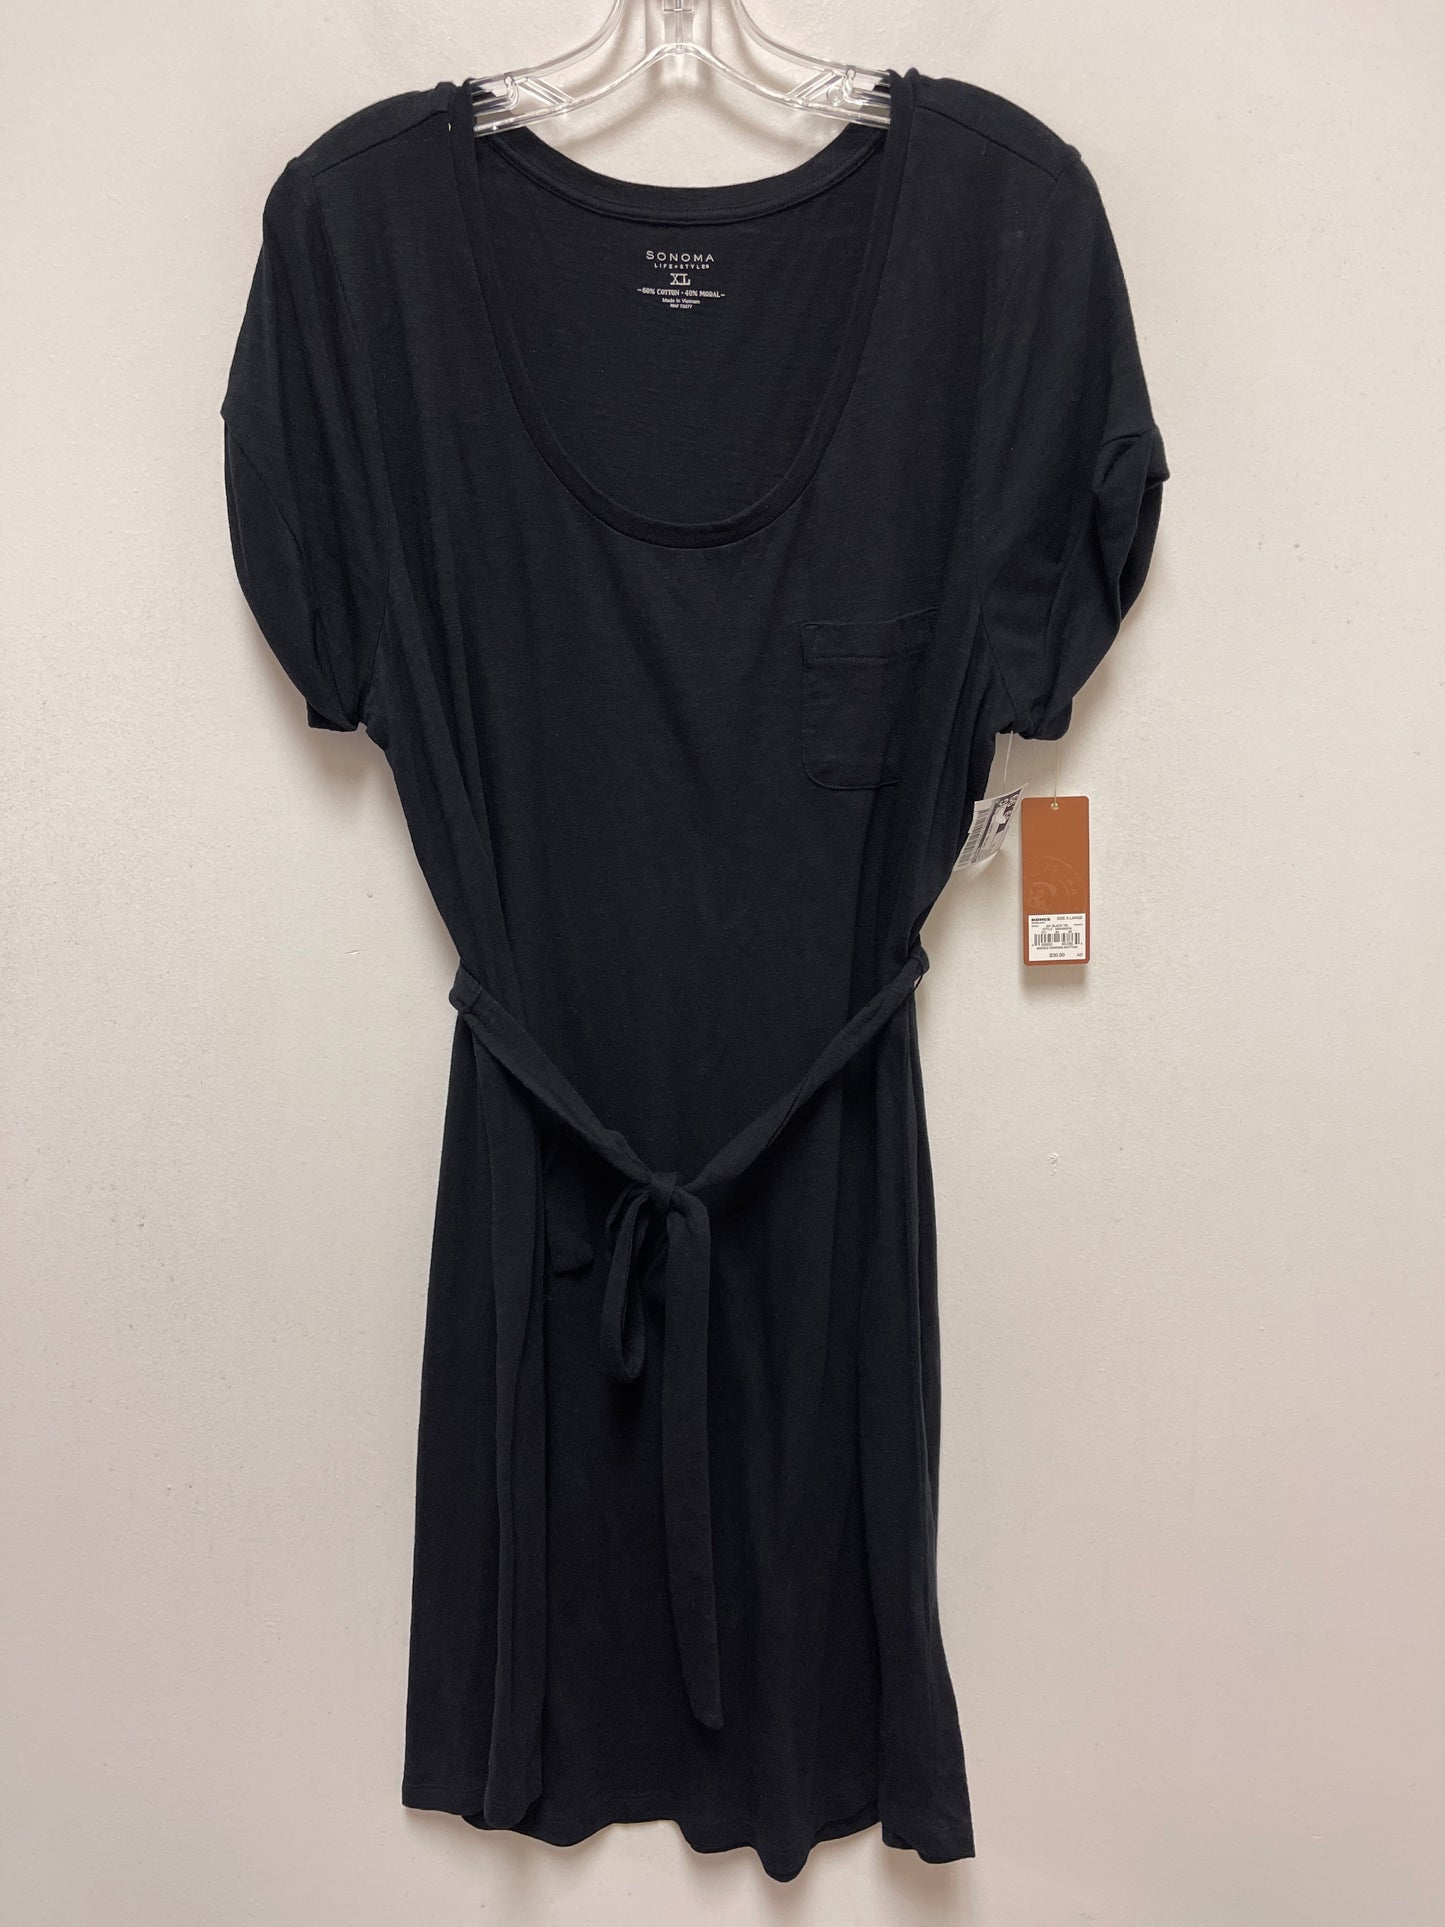 Black Dress Casual Short Sonoma, Size Xl